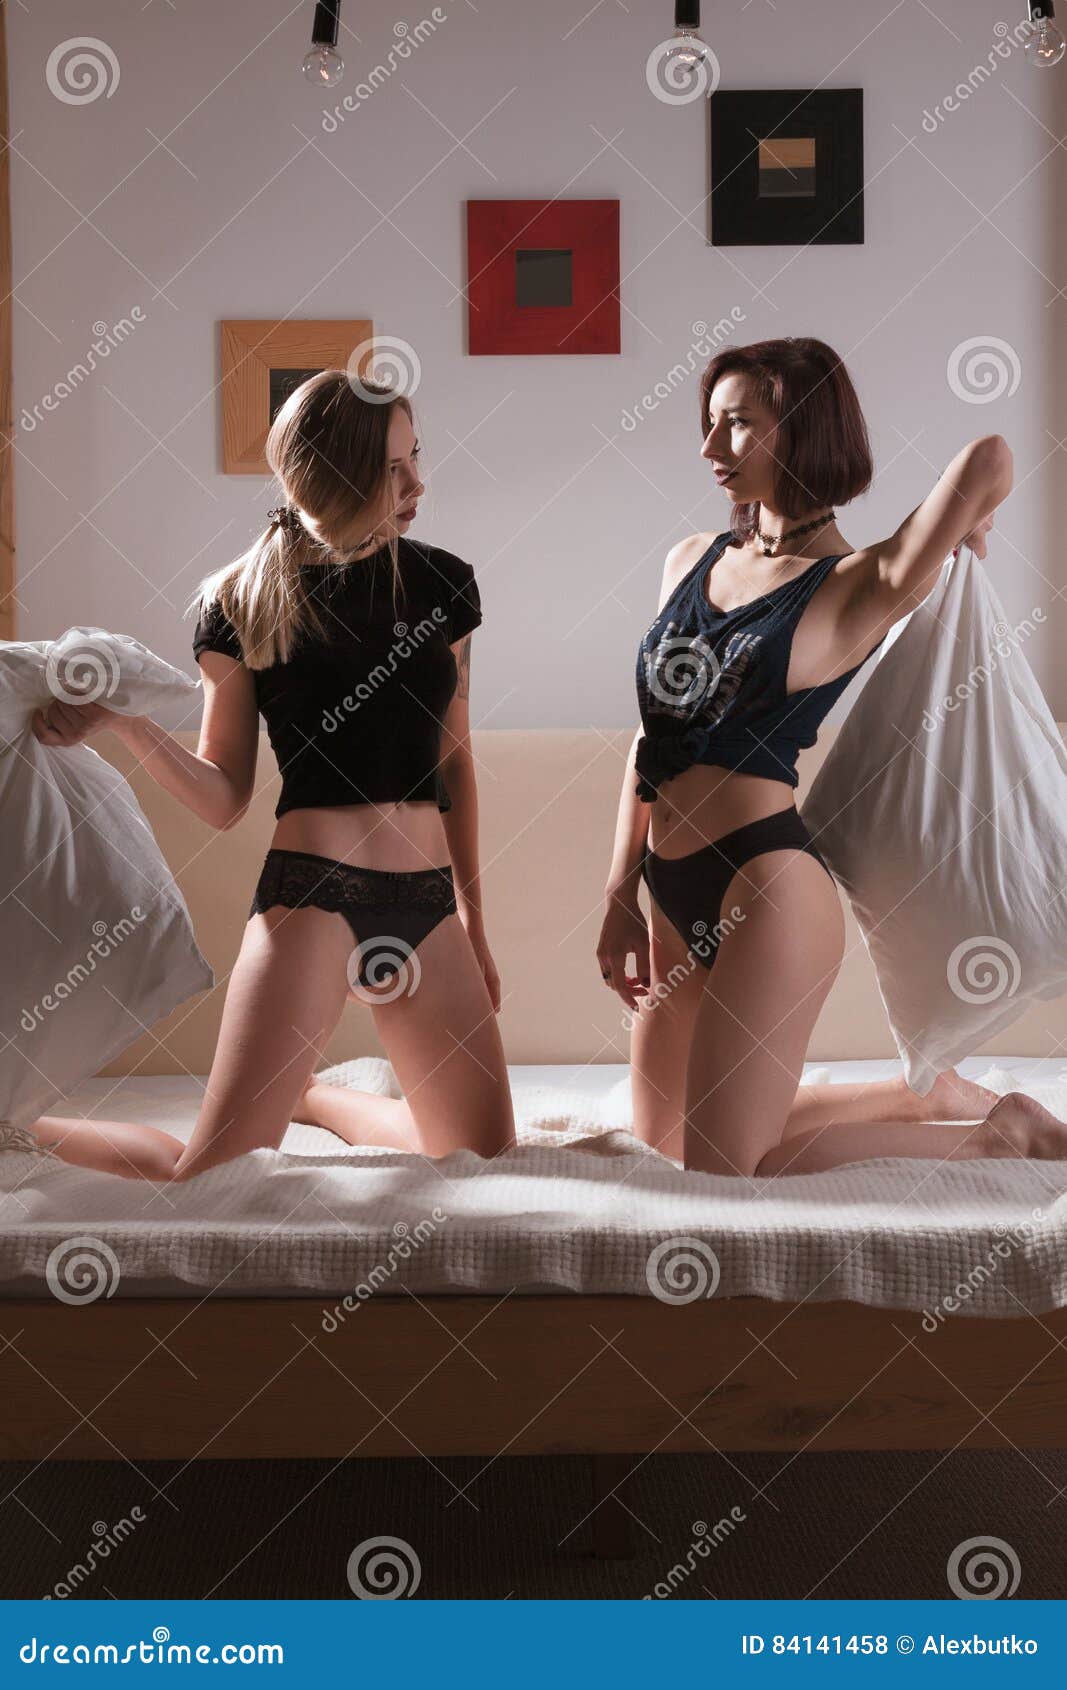 celeste roberson add naked girls pillow fight photo